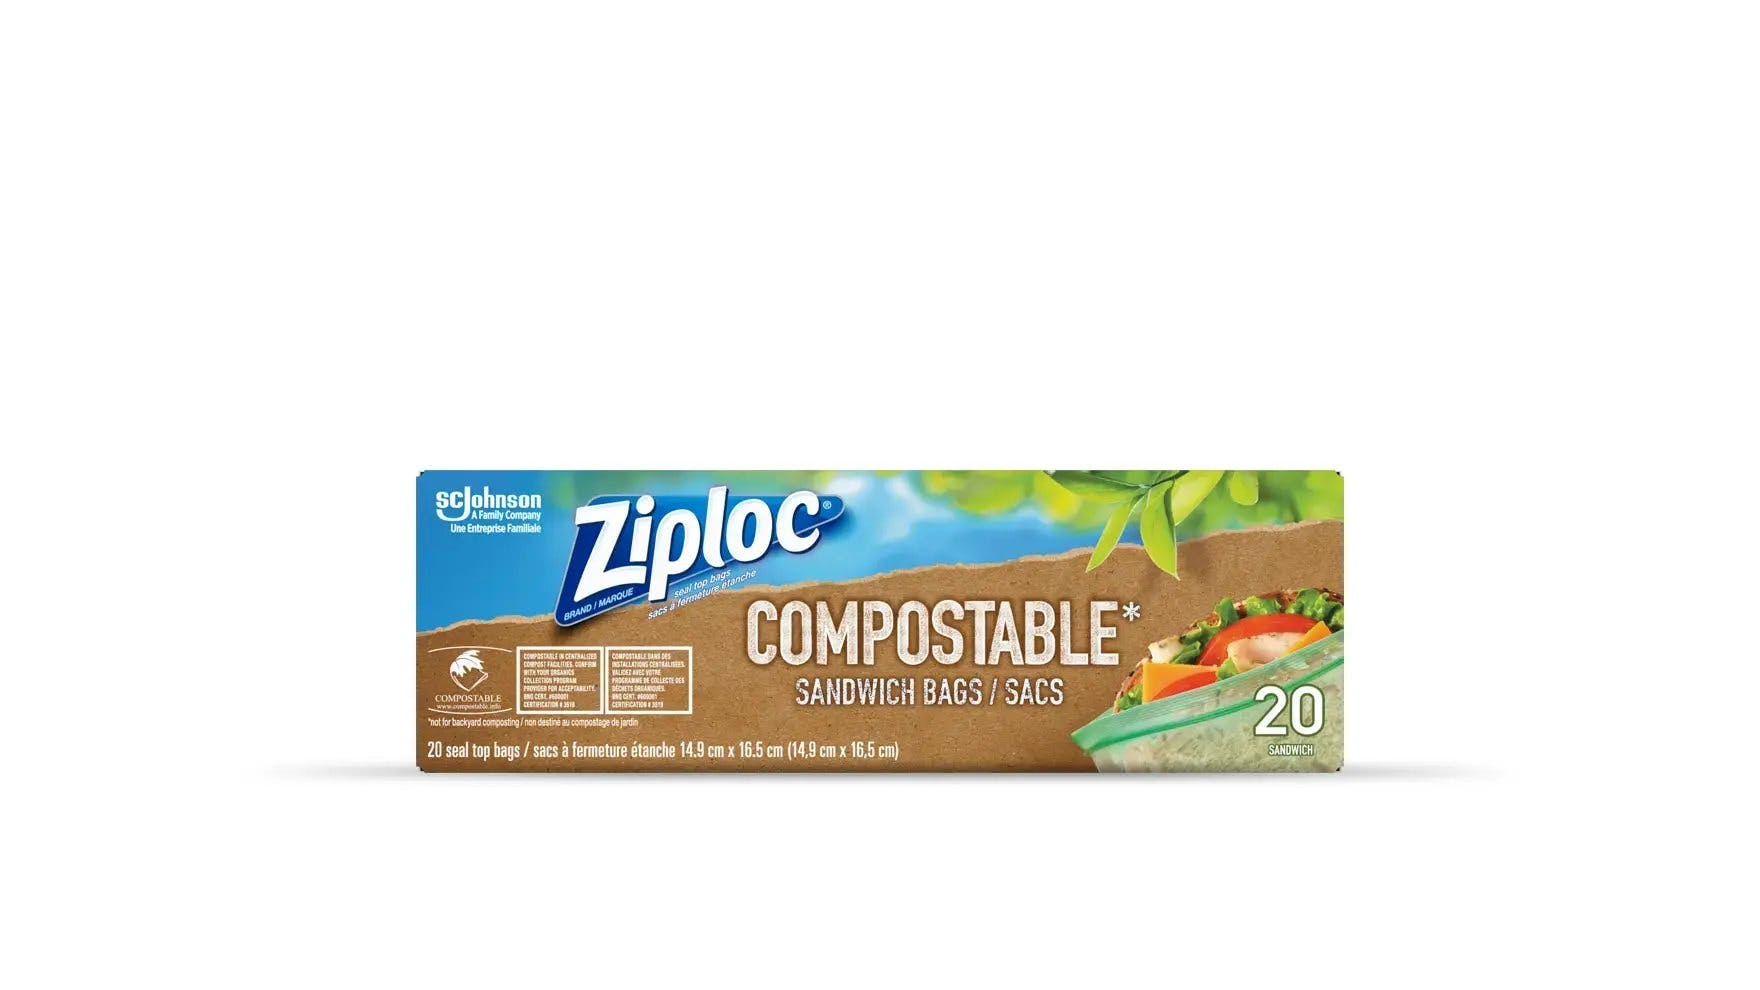 Front of Ziploc compostable sandwich bags box.